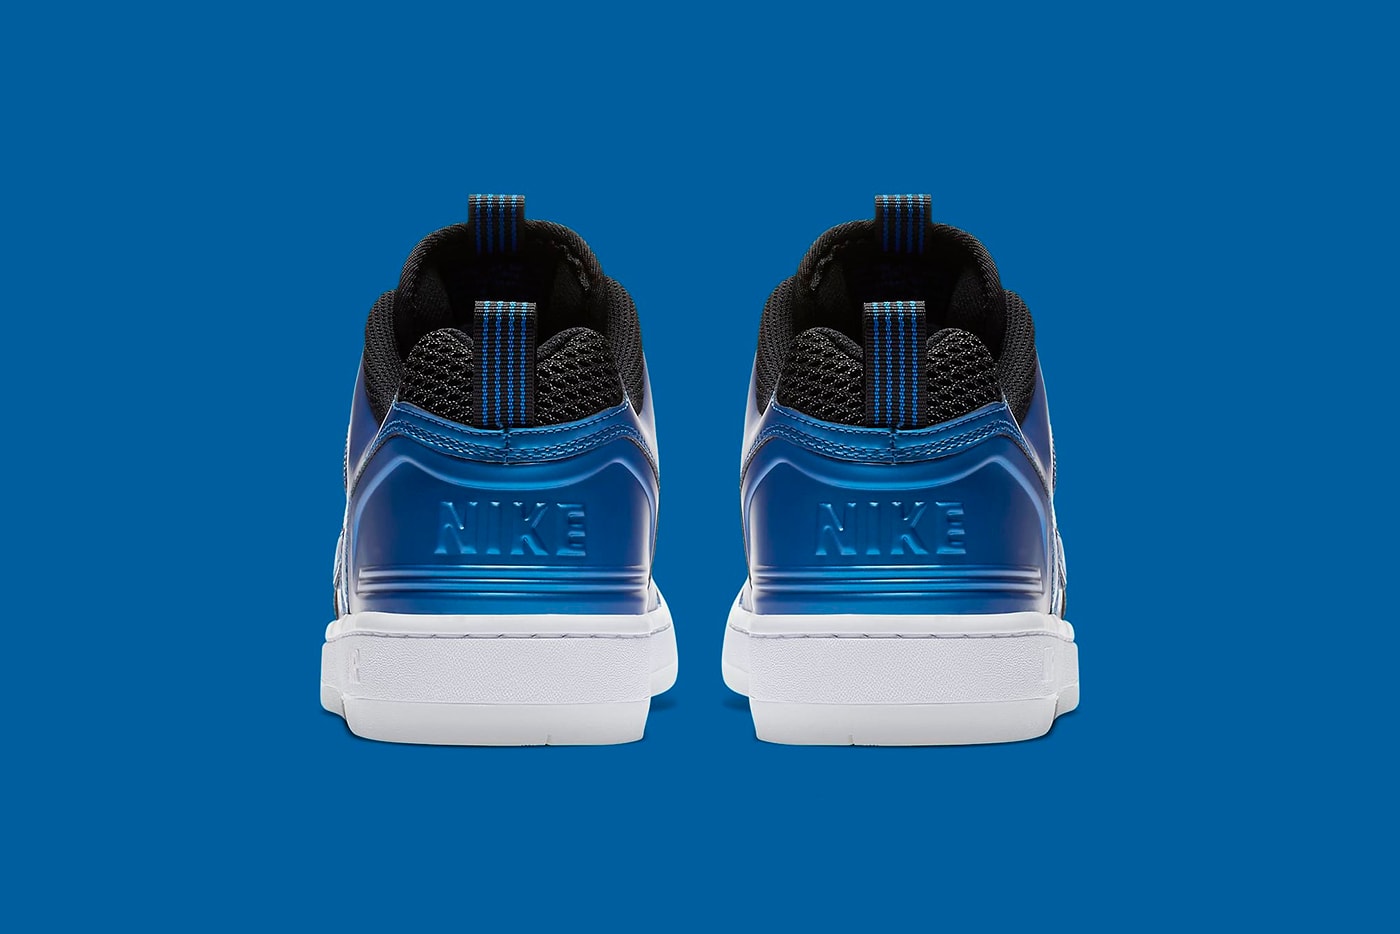 Nike Air Force 2 Low Foamposite rivals pack penny hardaway Neon Royal black november 2018 release